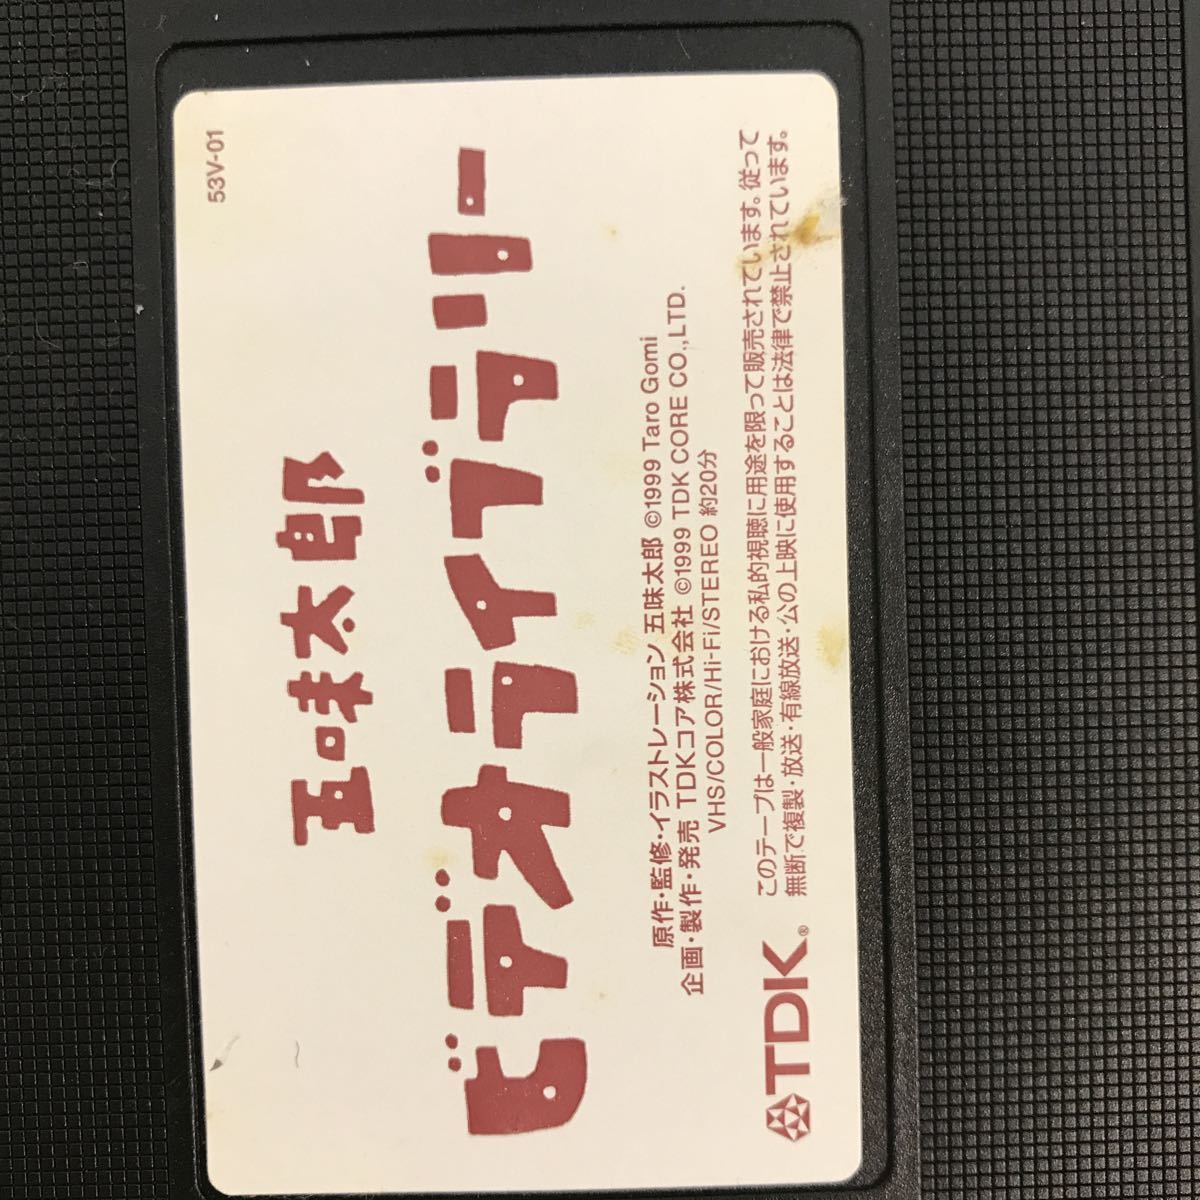 A53-006 ViDEO LiBRARY 五味太郎 ビデオ・ライブラリー きんぎょがにげた VHS 付録無し アニメ 